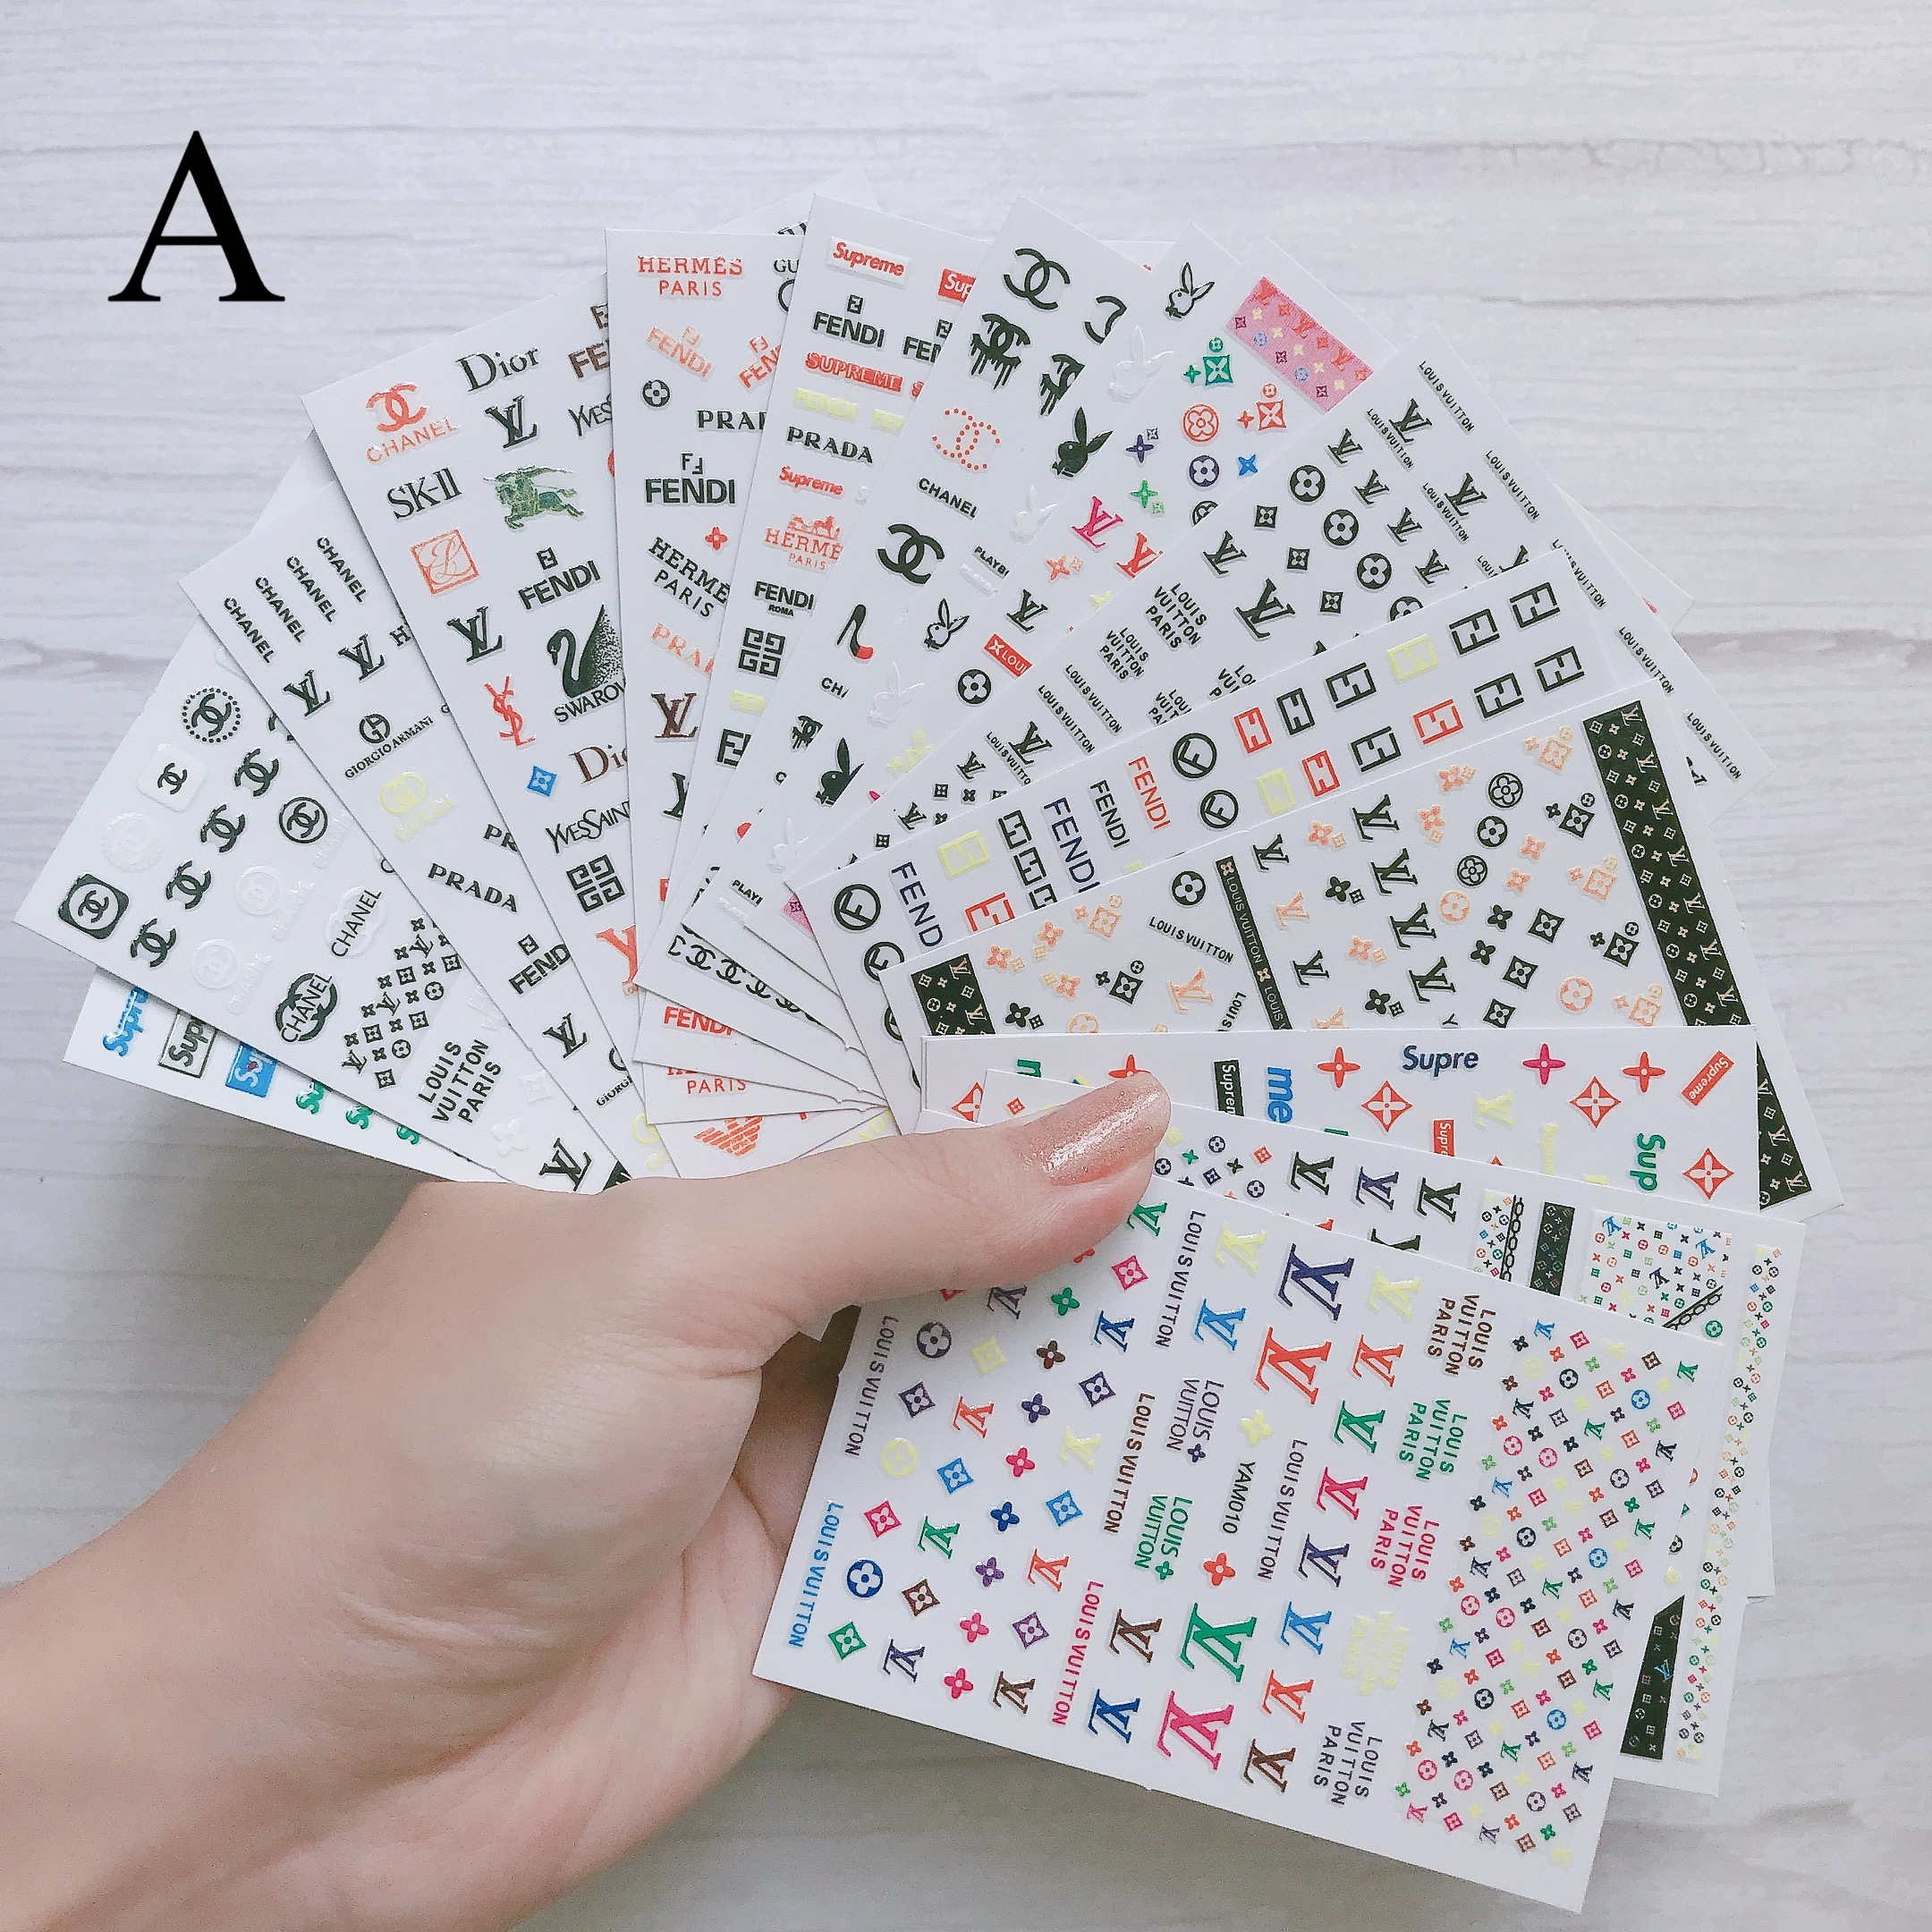 Best Seller Designer Nail Art Stickers Collection